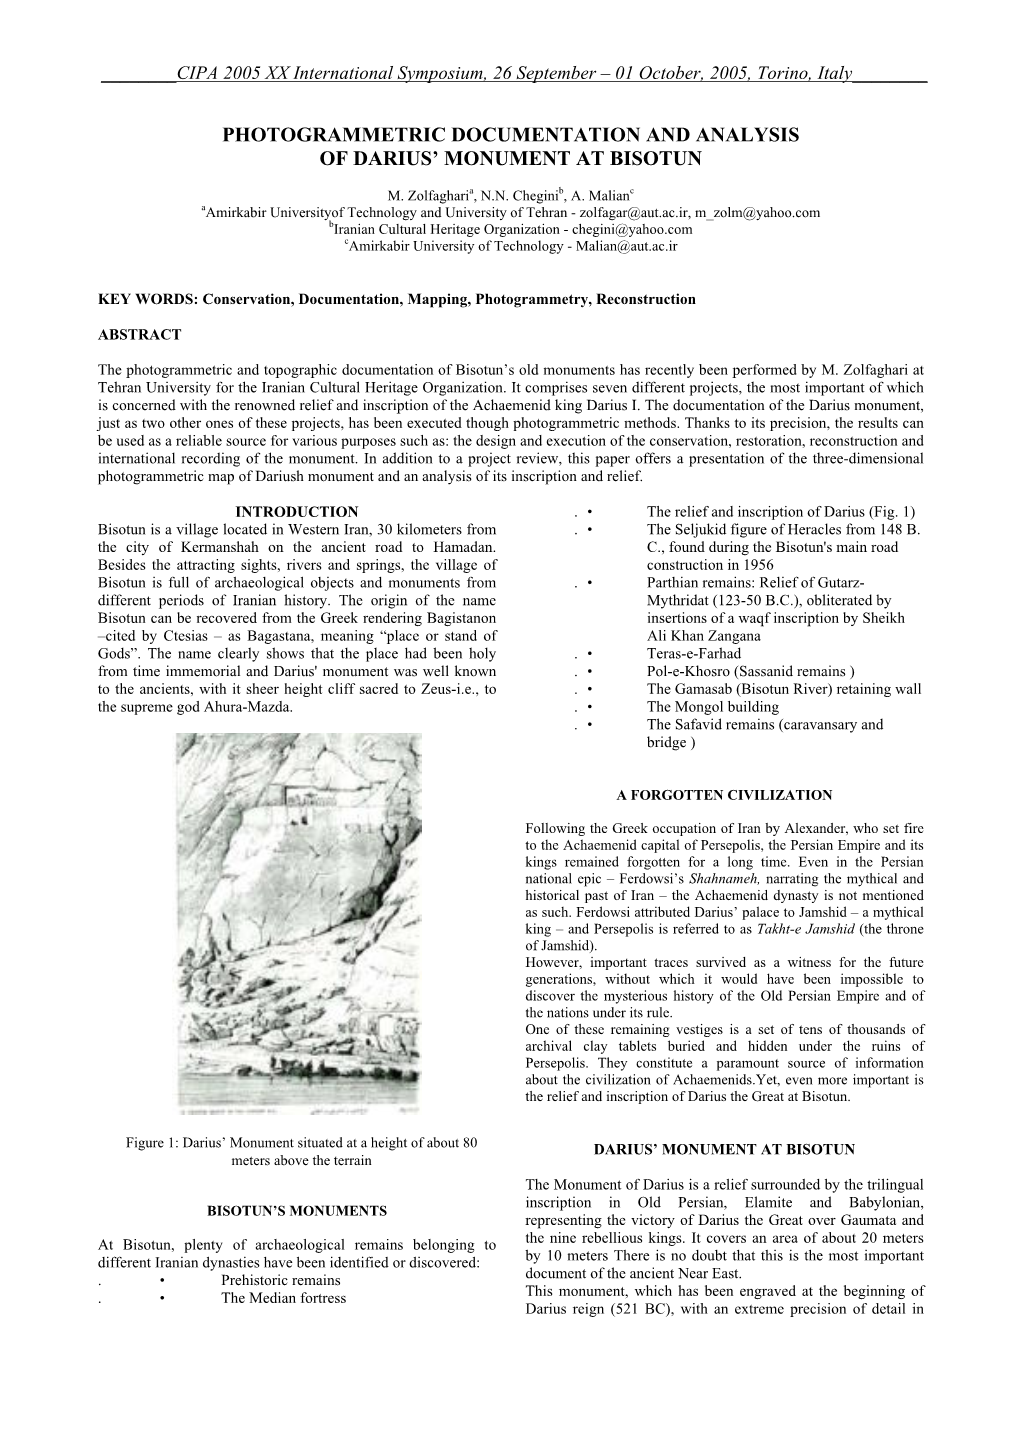 Photogrammetric Documentation and Analysis of Darius’ Monument at Bisotun